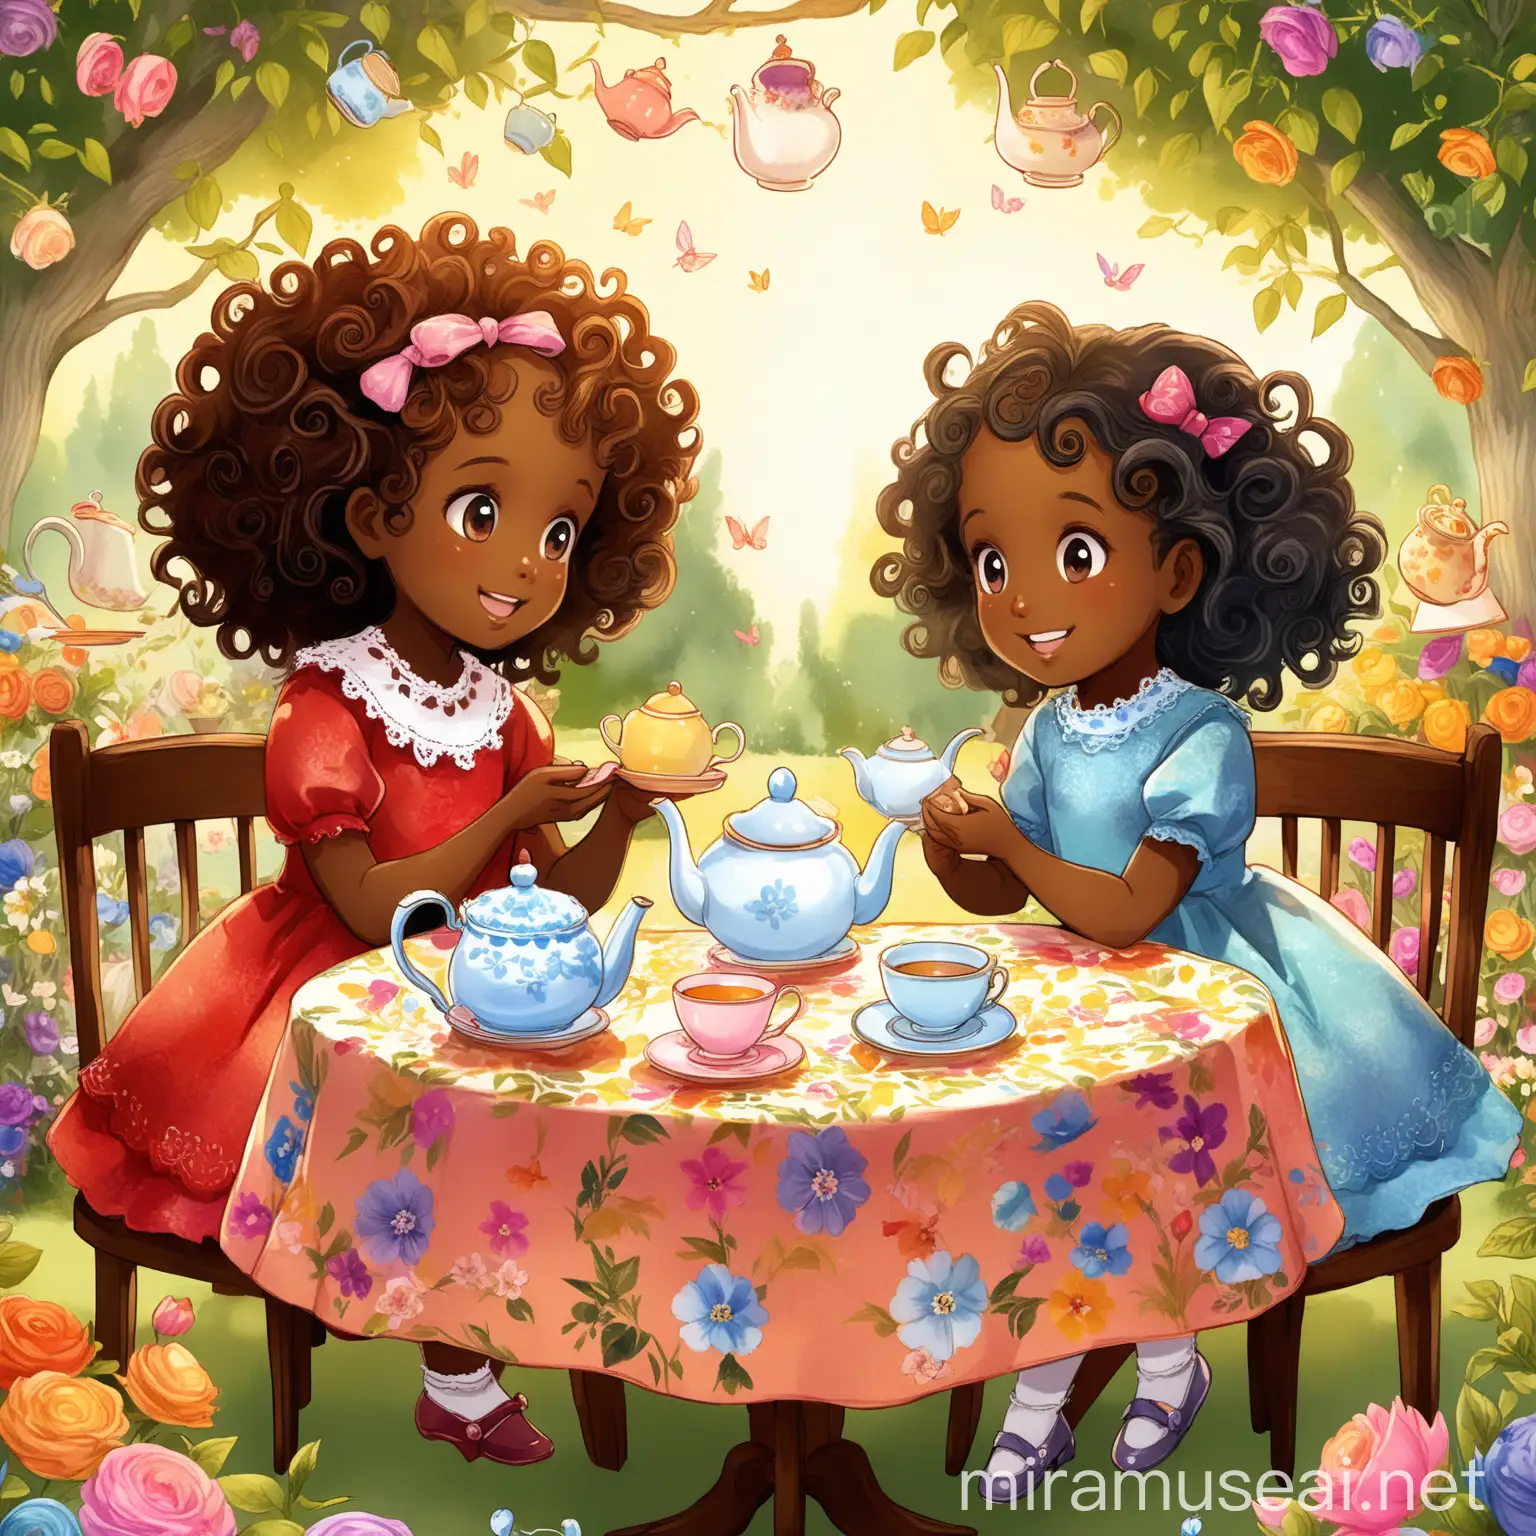 Joyful Tea Party Whimsical Garden Gathering for Two